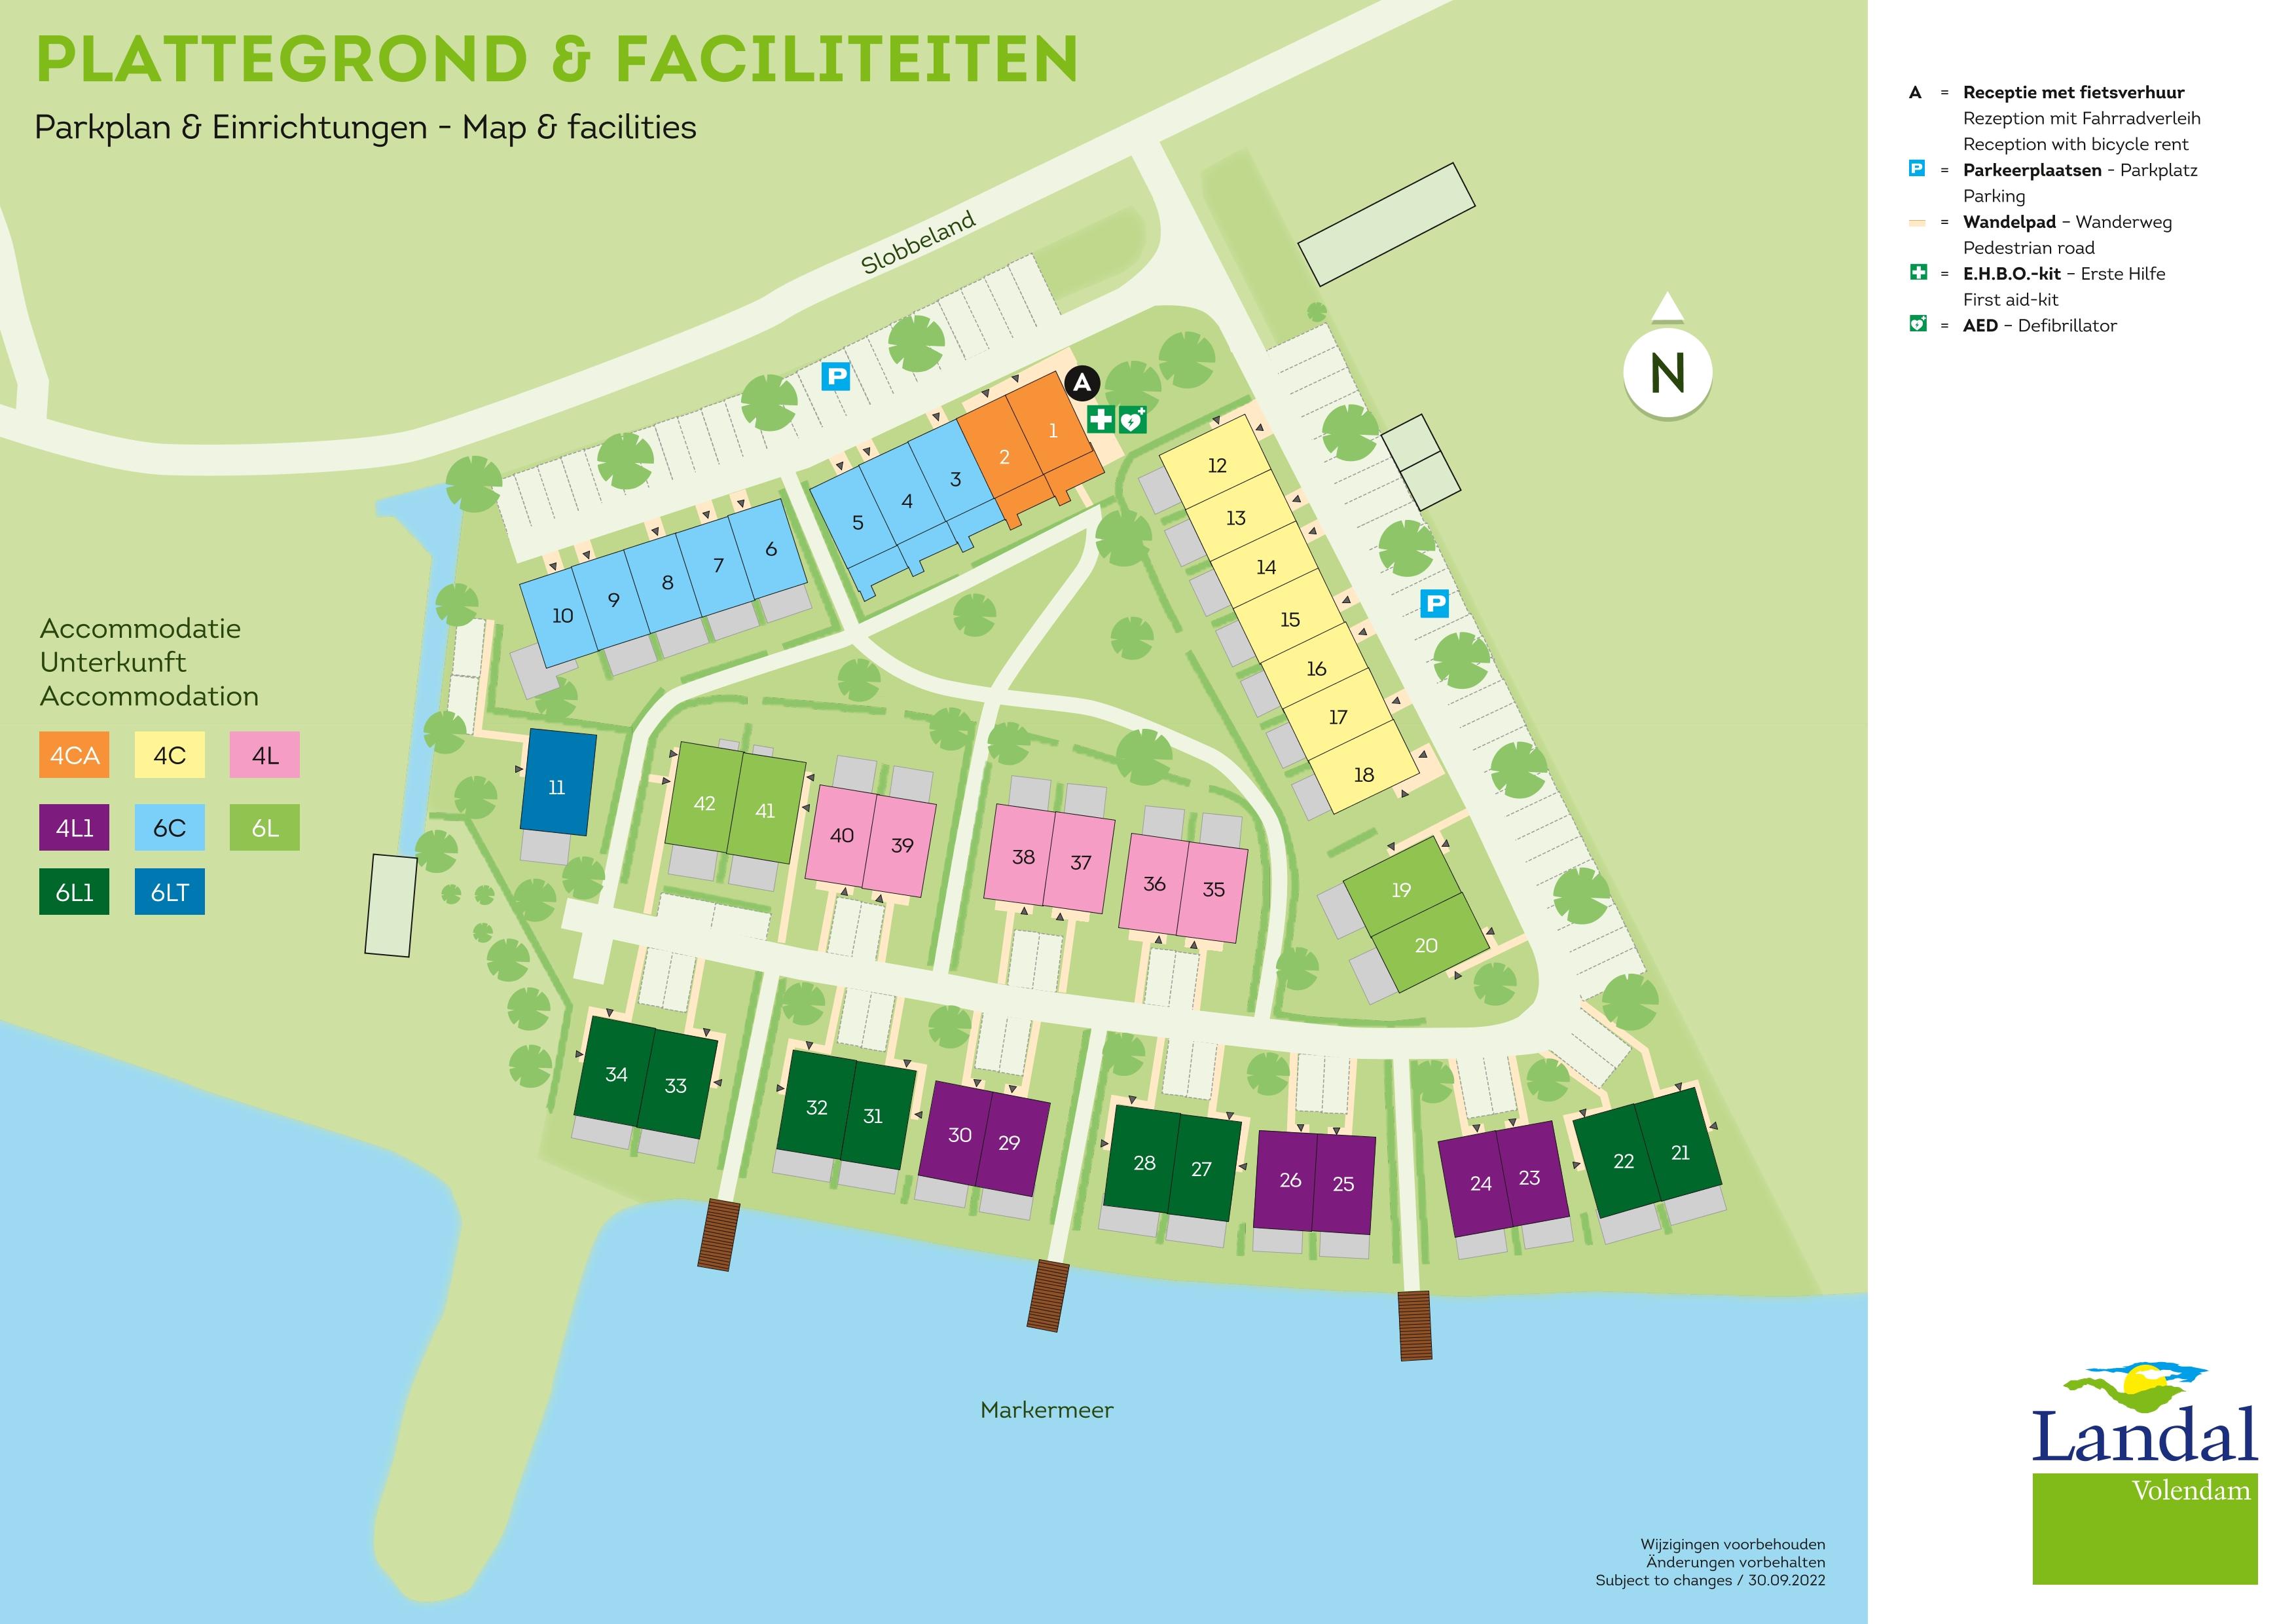 Parkplan Landal Volendam